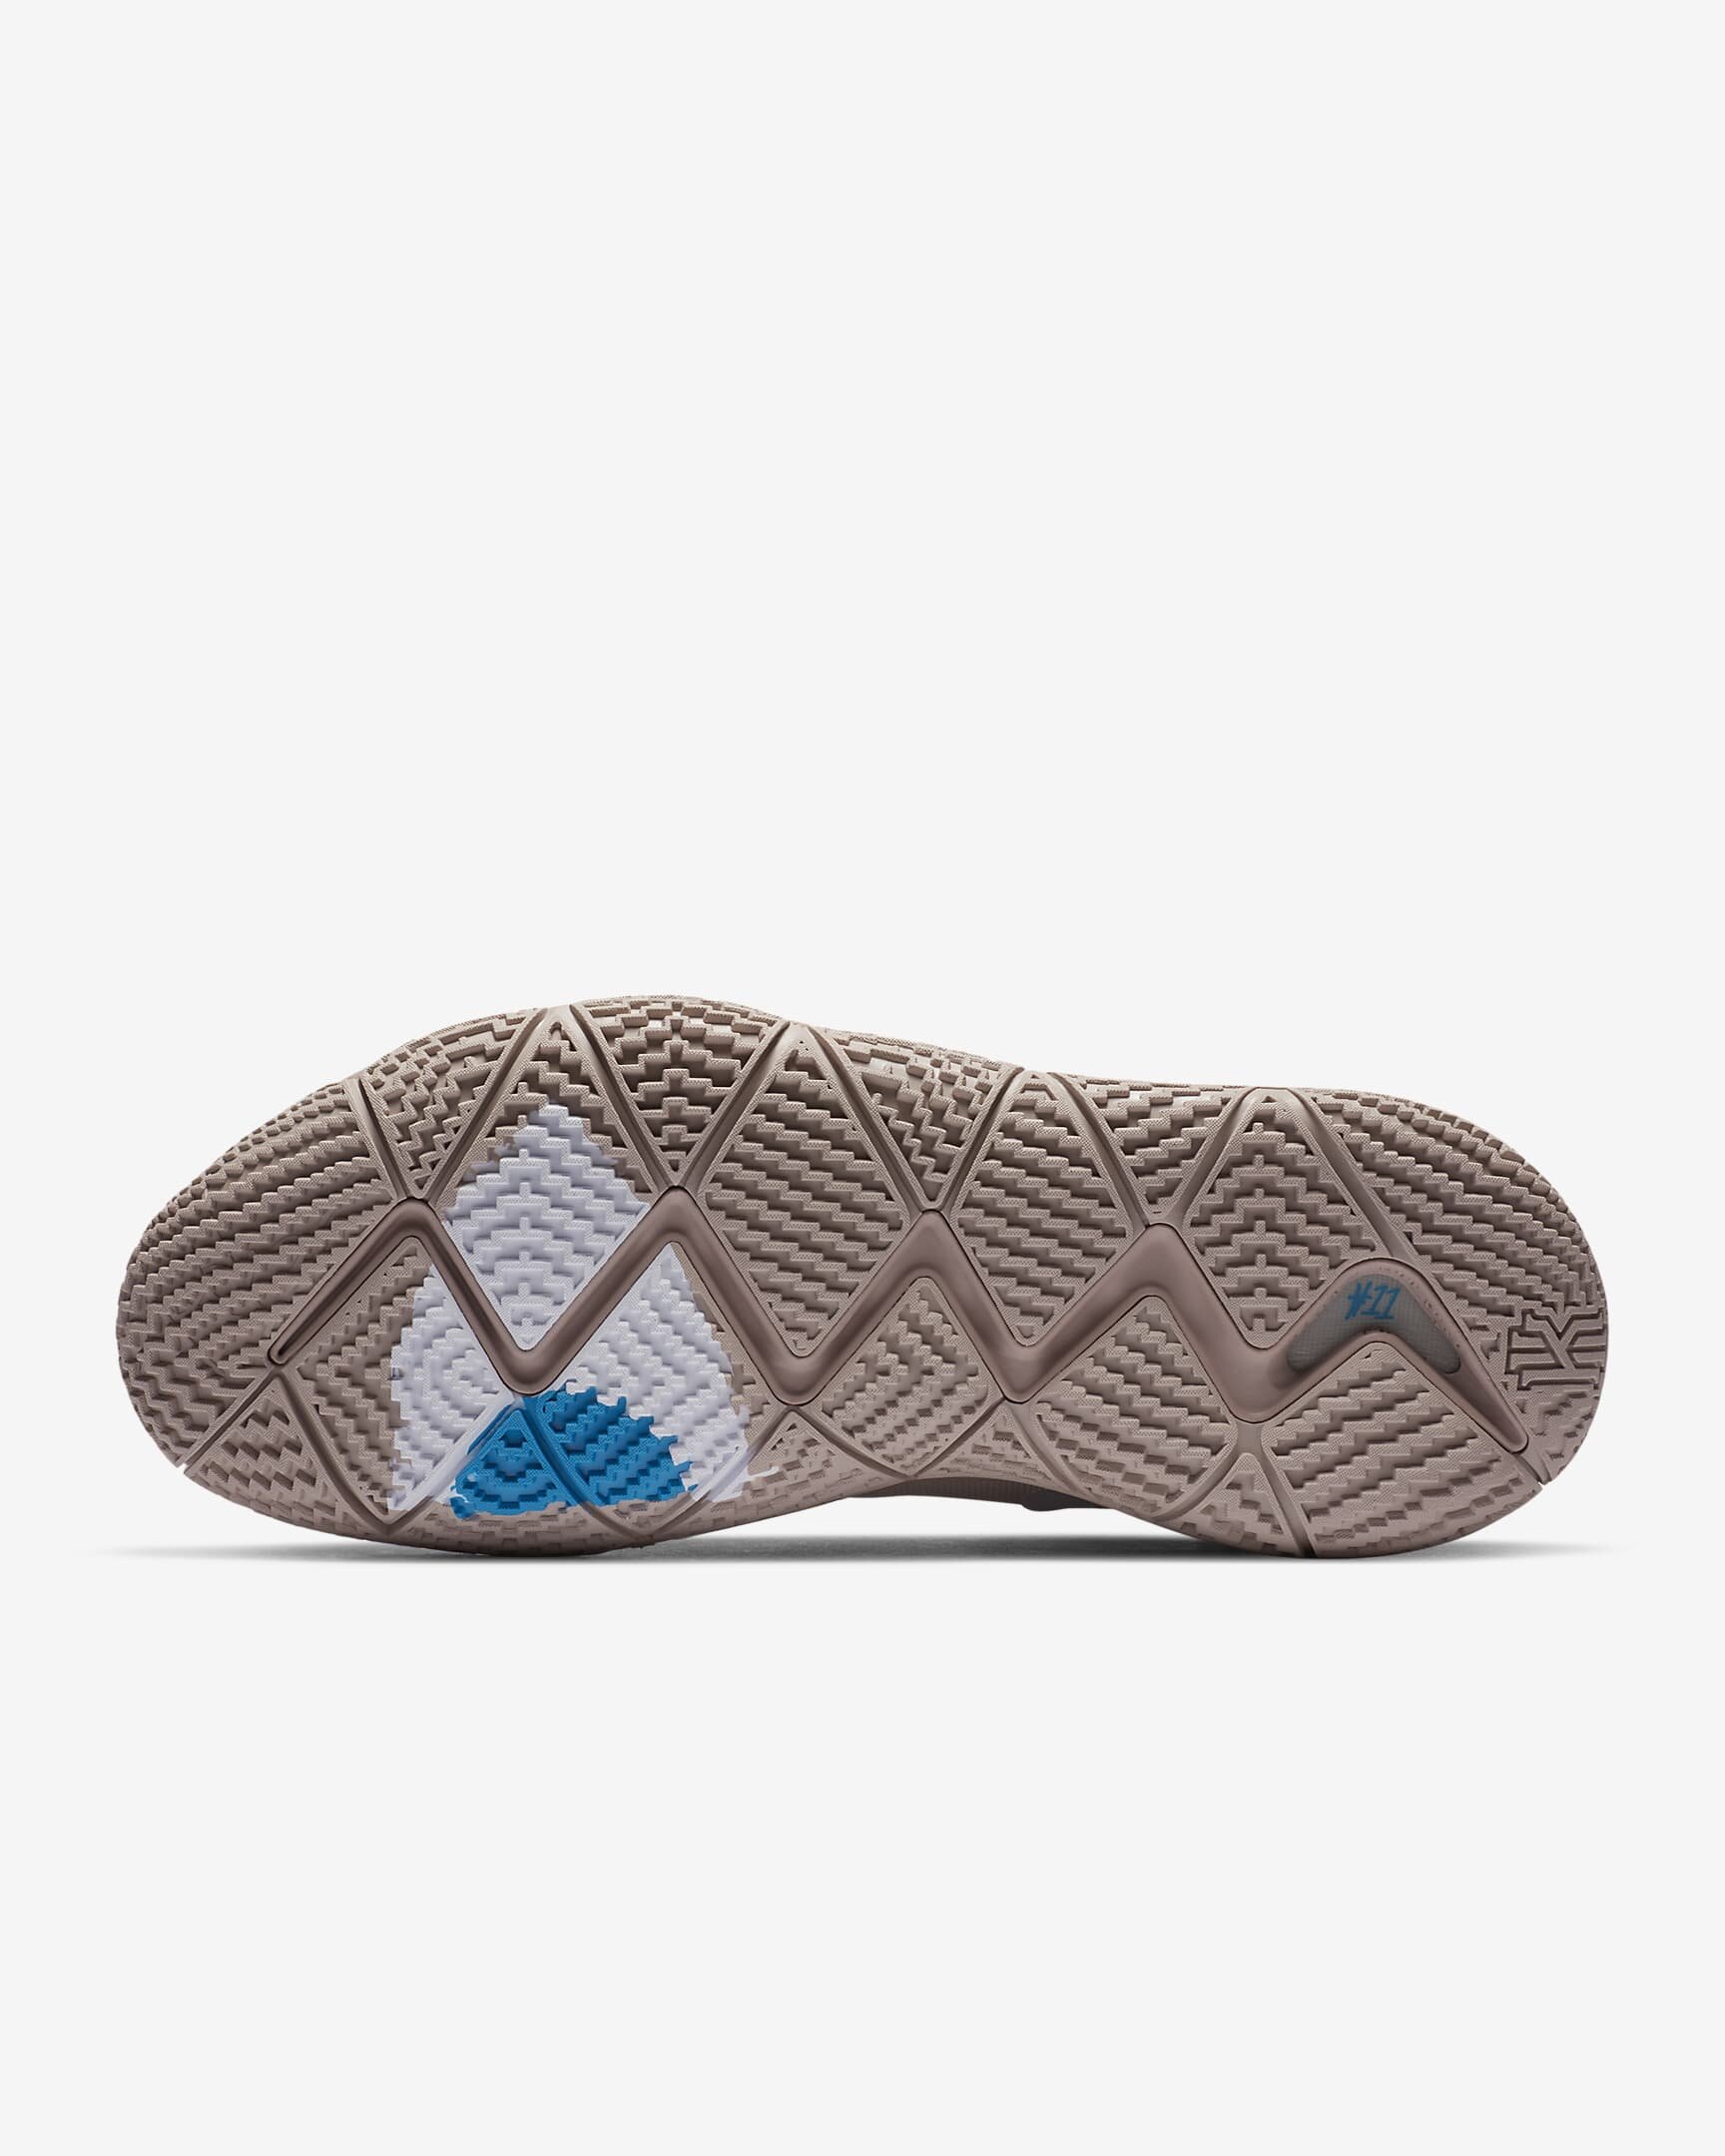 Sneaker Drop — Nike Kybrid S2 'What The PE'